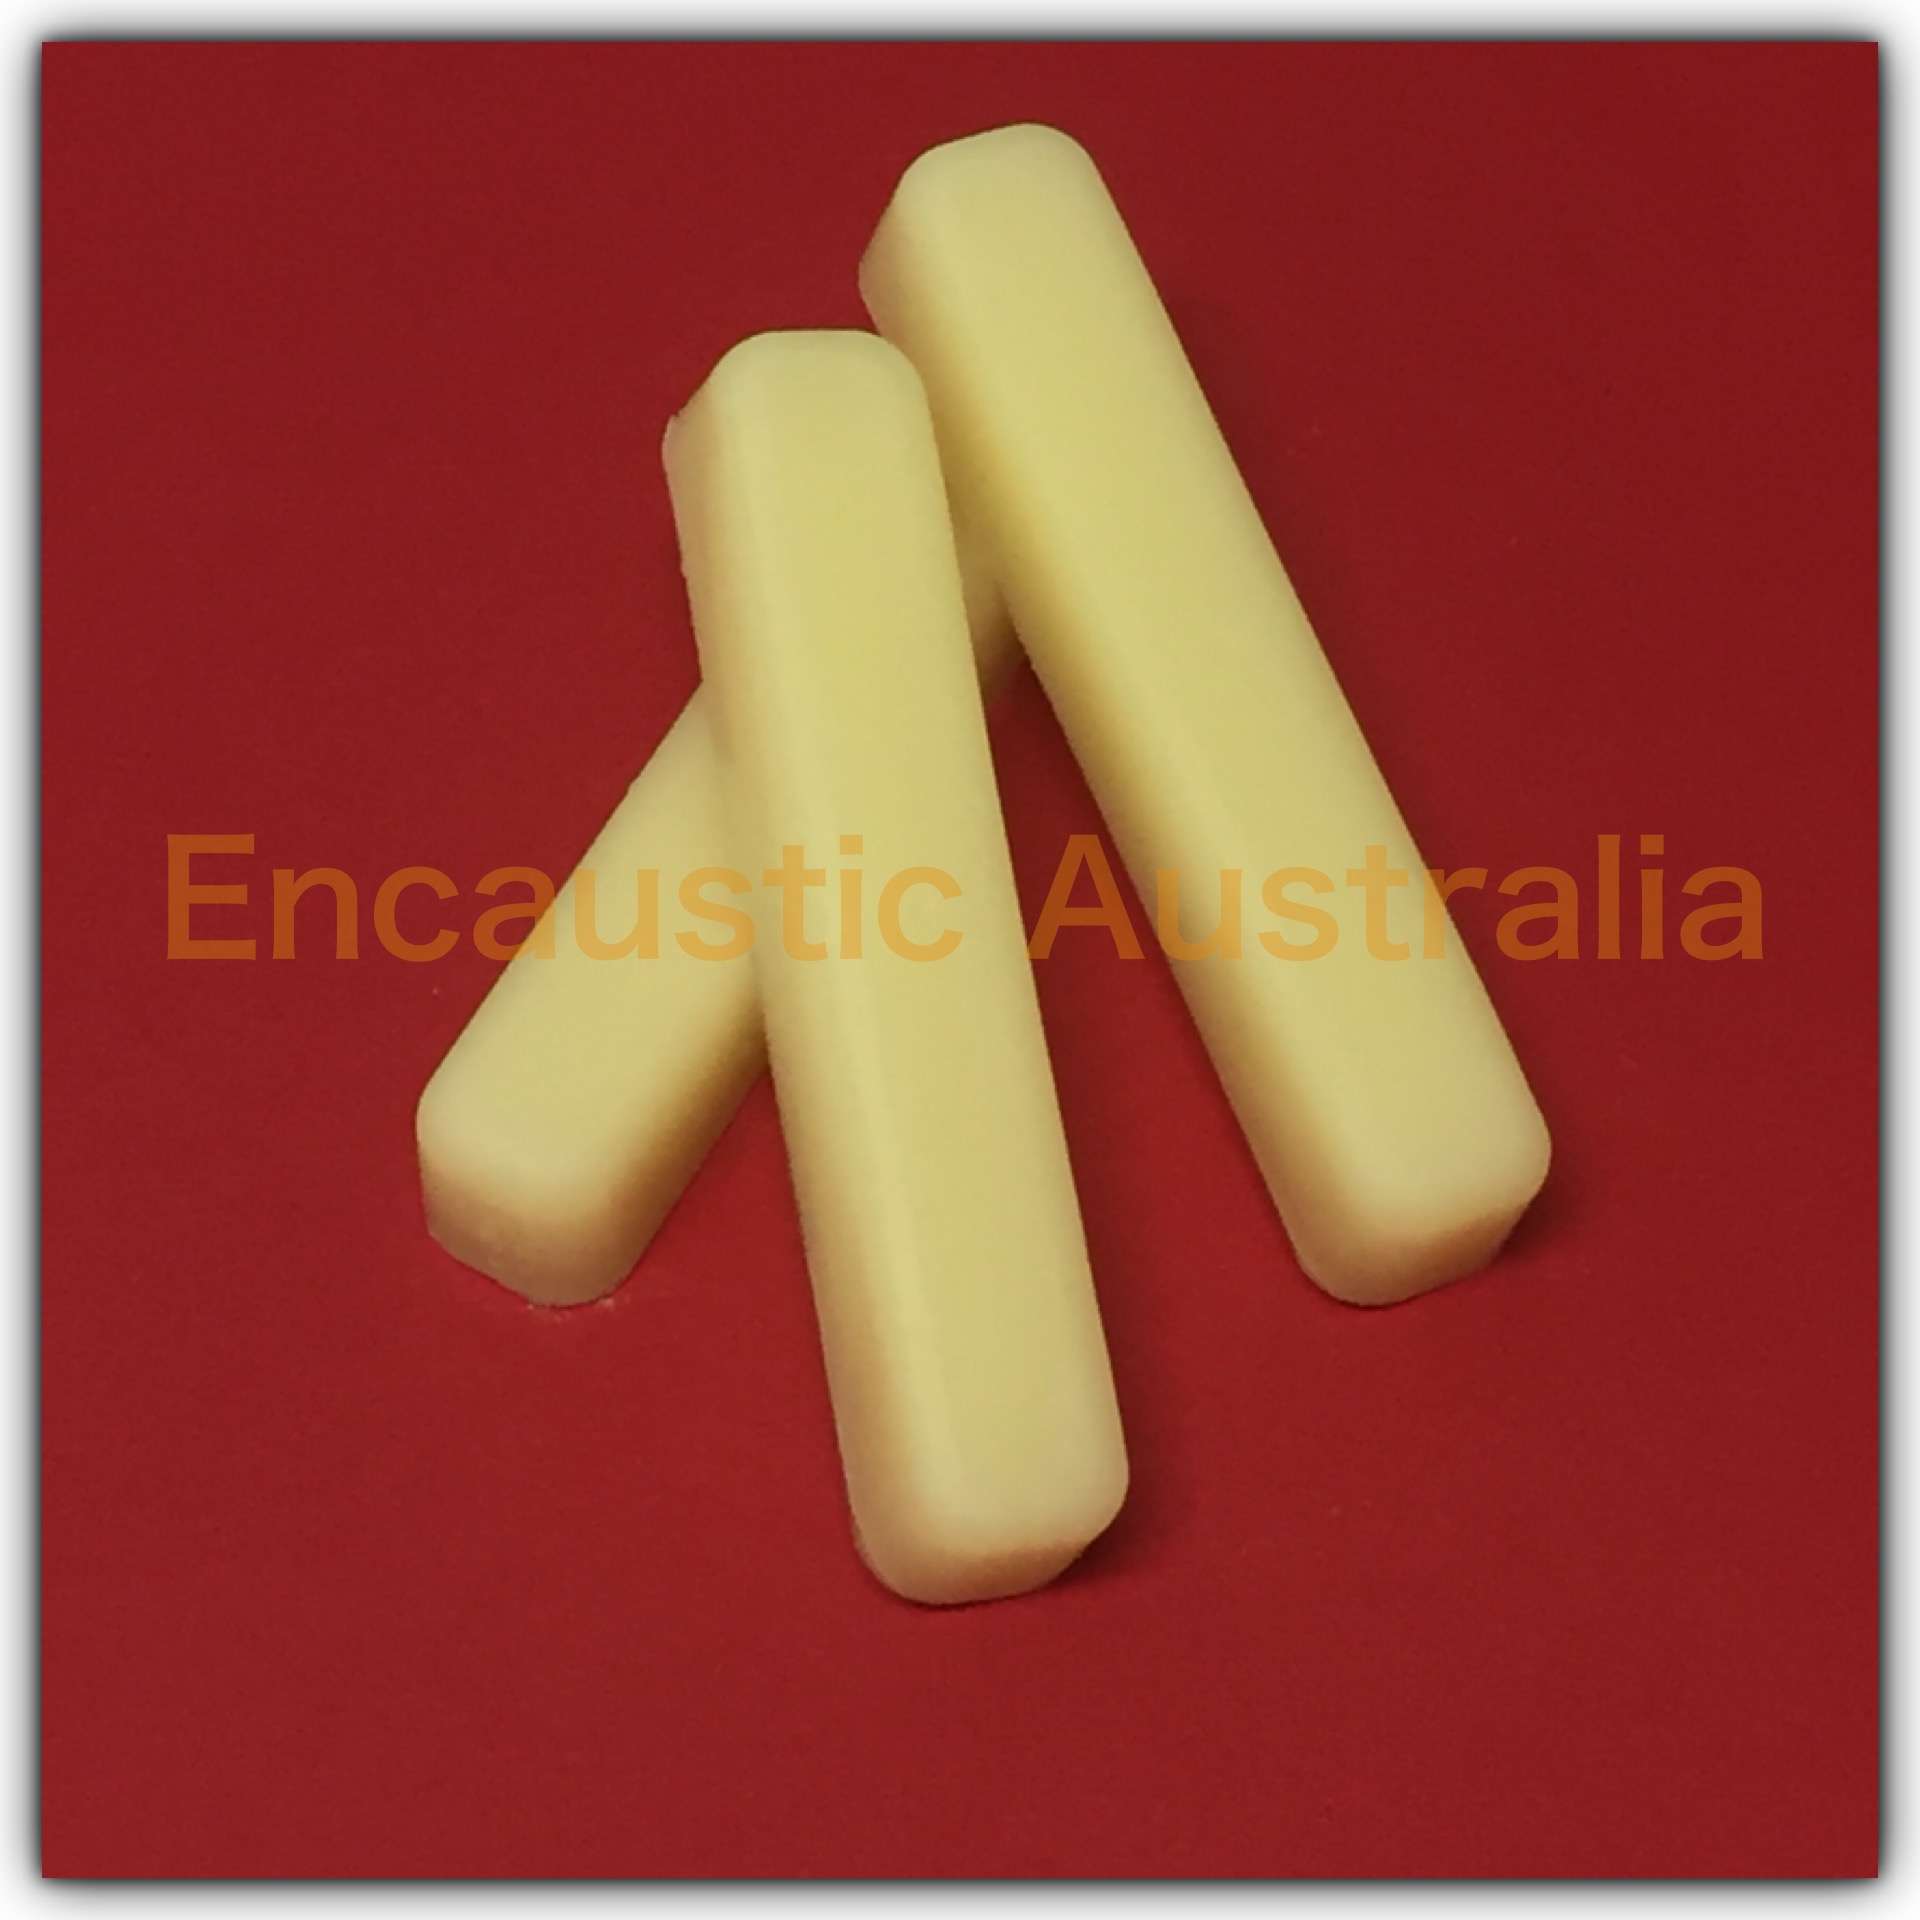 Encaustic Australia - Encaustic Medium - 3 x 18g Bars